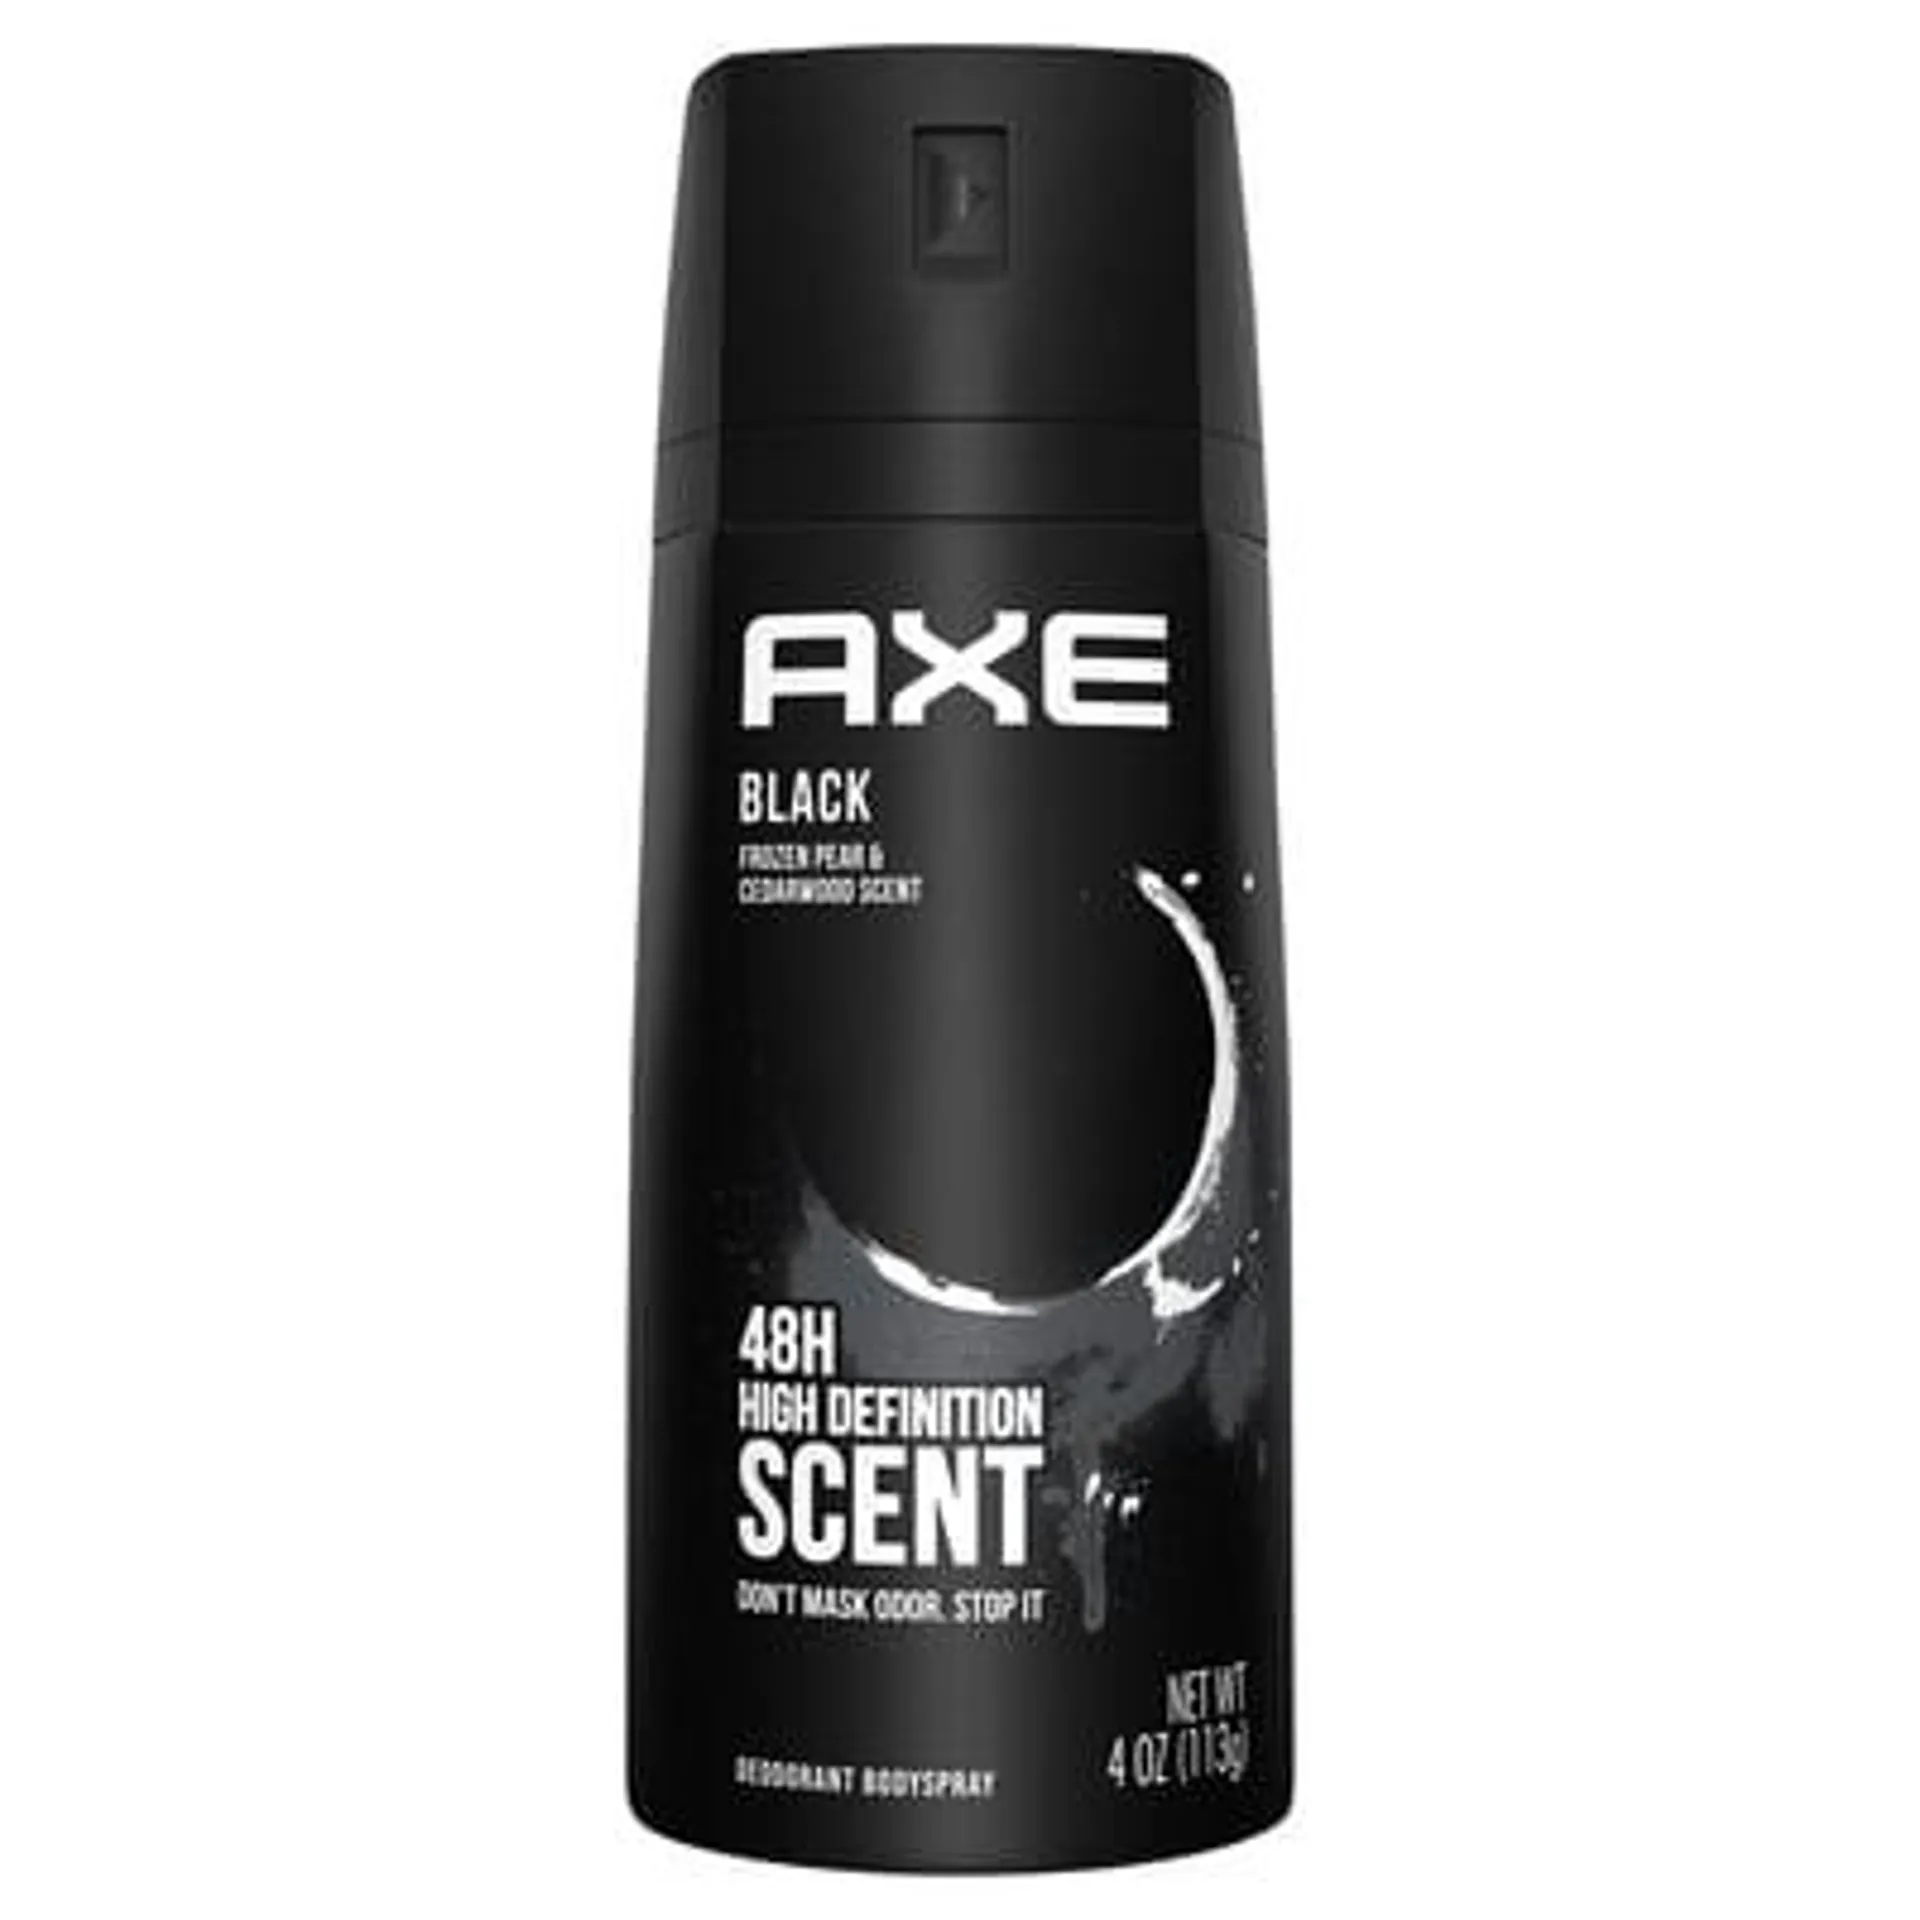 Axe, Deodorant Body Spray, Black, Frozen Pear & Cedarwood Scent